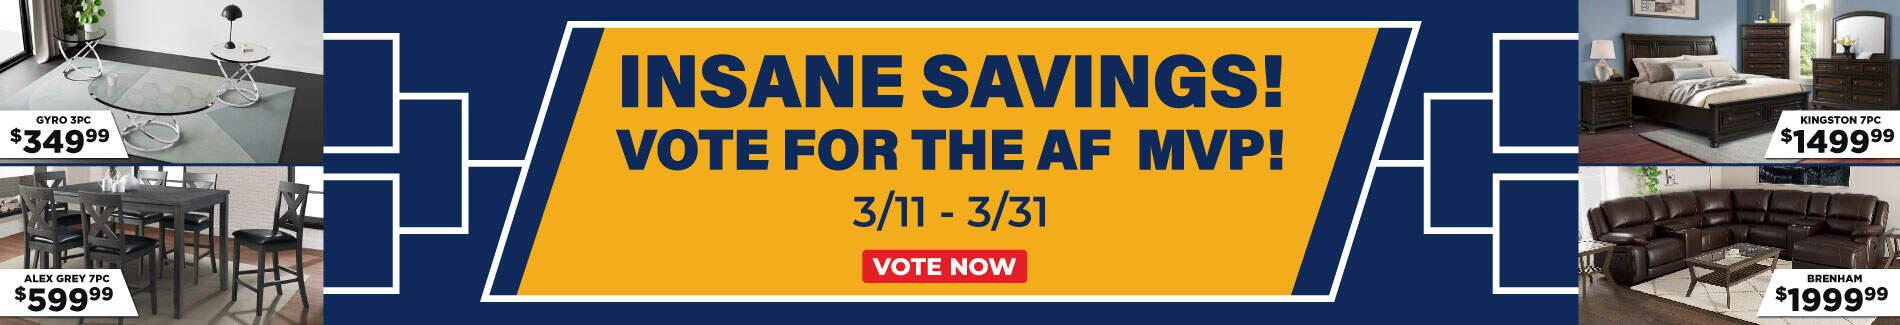 Gyro 3PC $349.99. Alex Grey 7PC $599.99 Insane Savings! Vote for the AF MVP! 3/11-3/31. Vote Now Kingston 7PC $1,499.99. Brenham 1,999.99